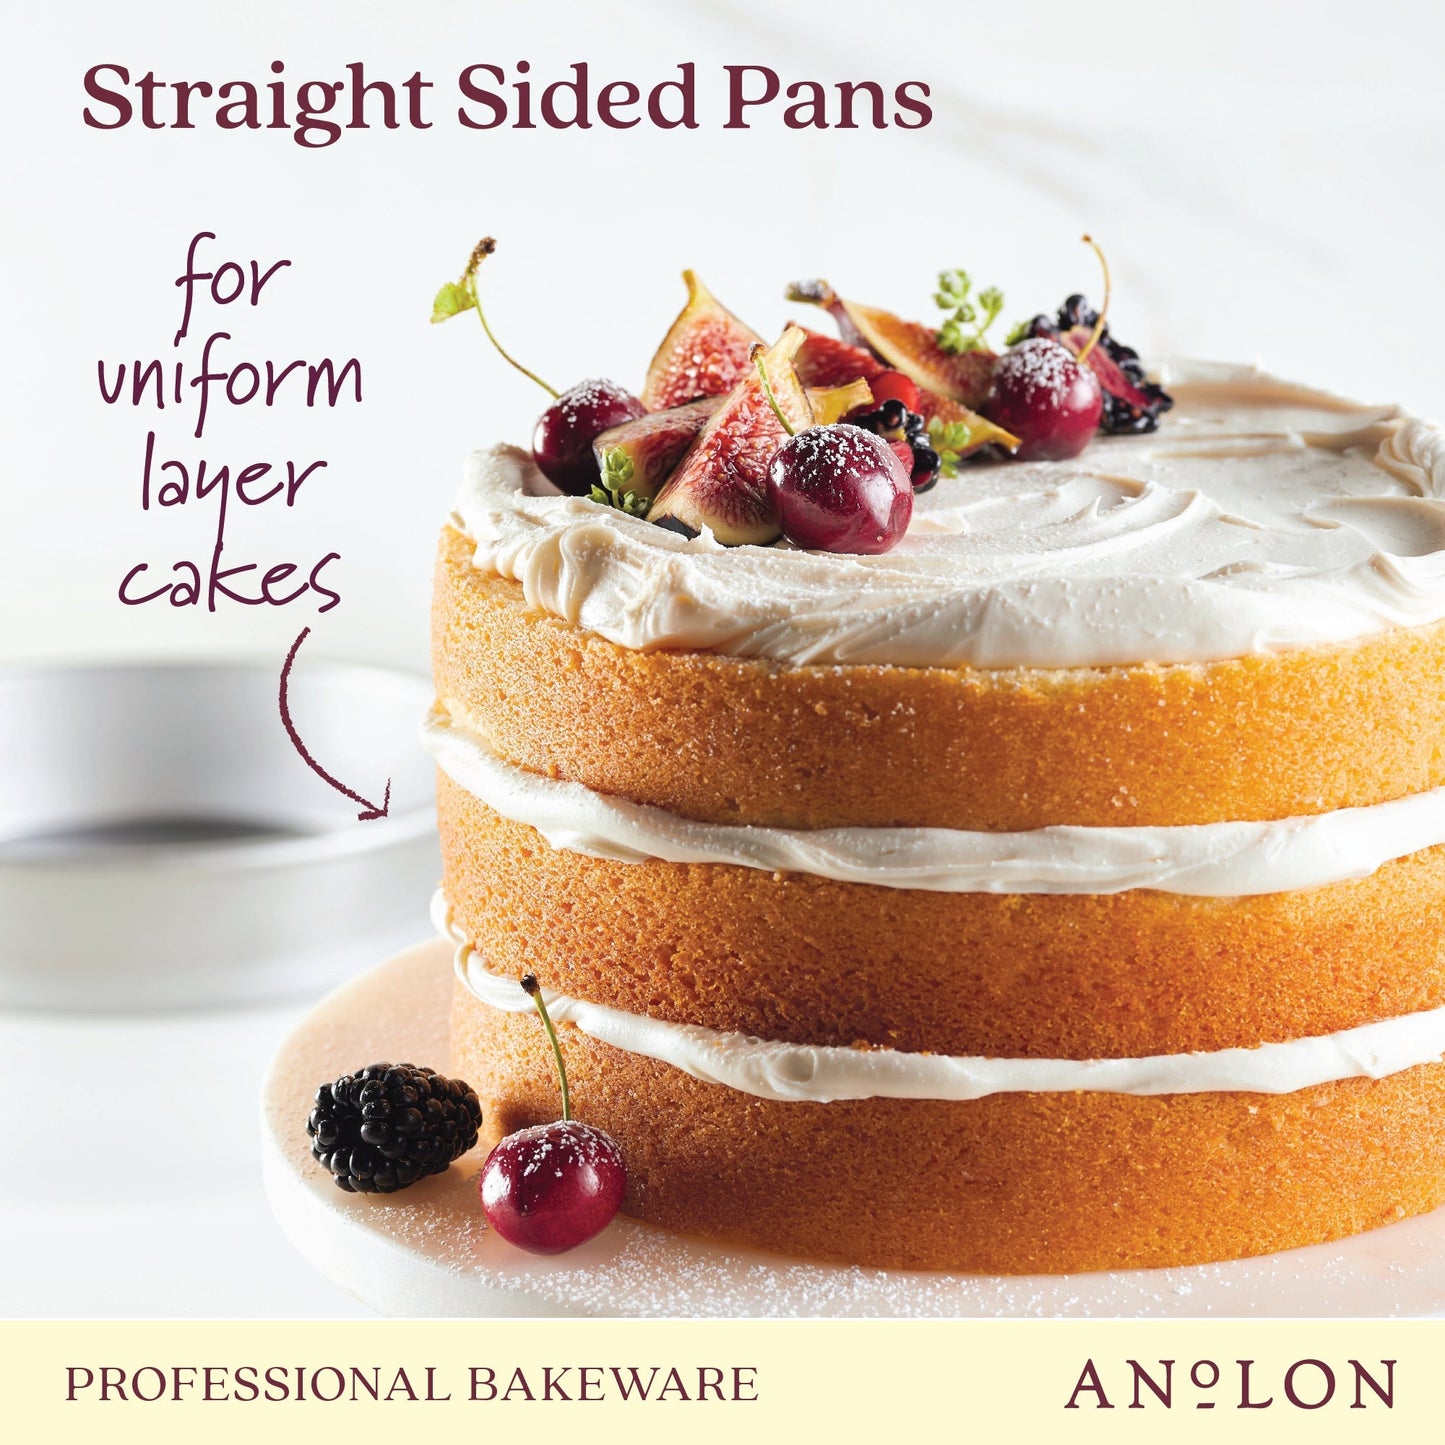 Anolon Pro-Bake Round Cake Pan 23cm